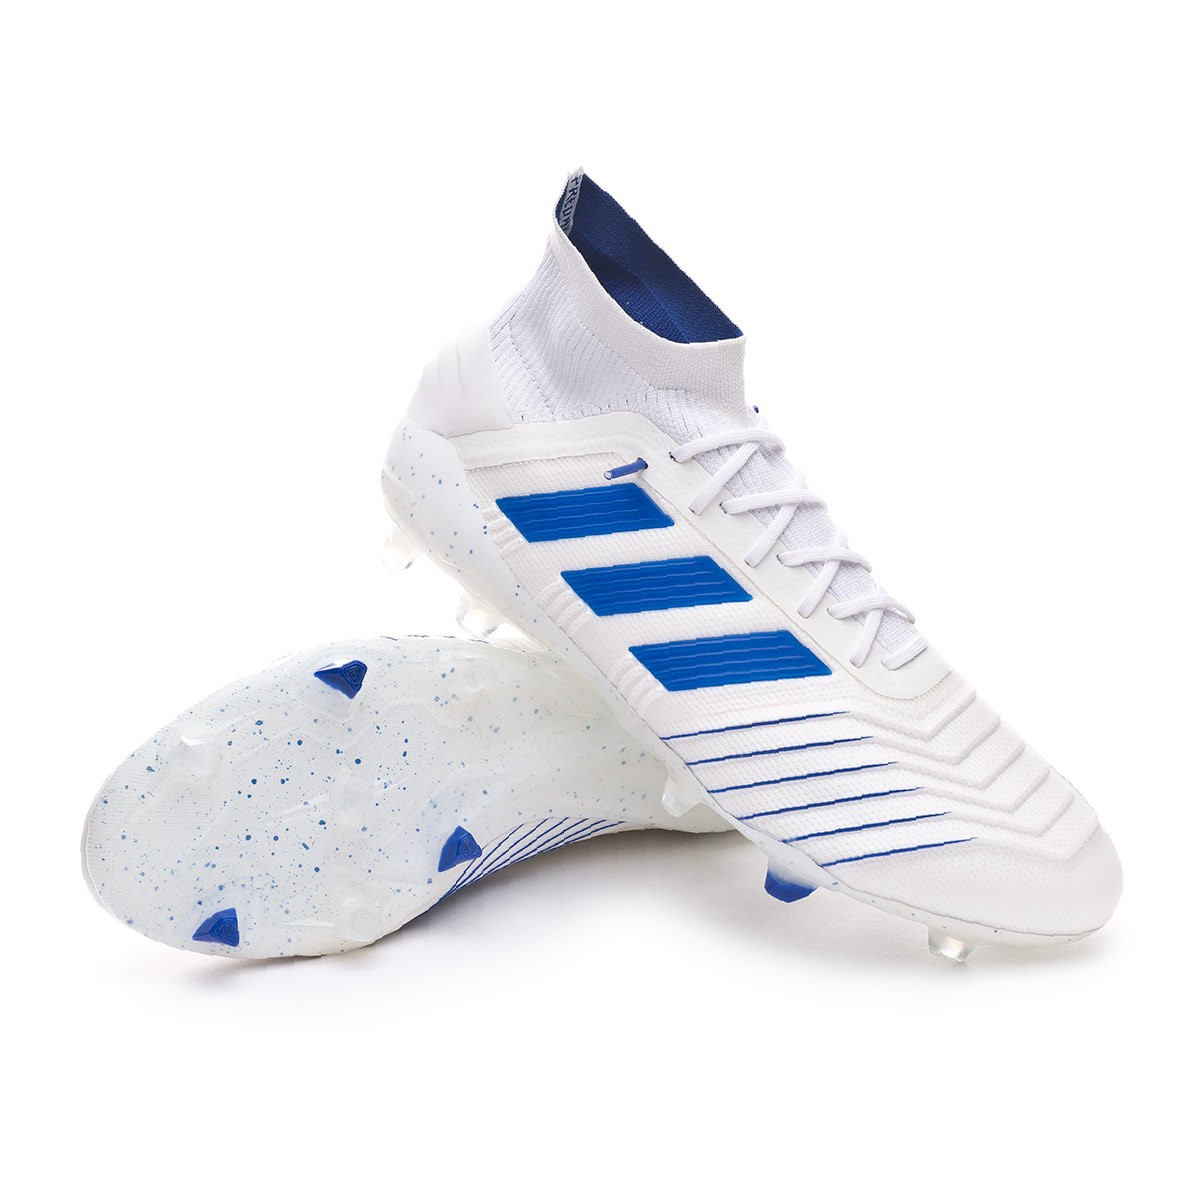 adidas predator white and blue